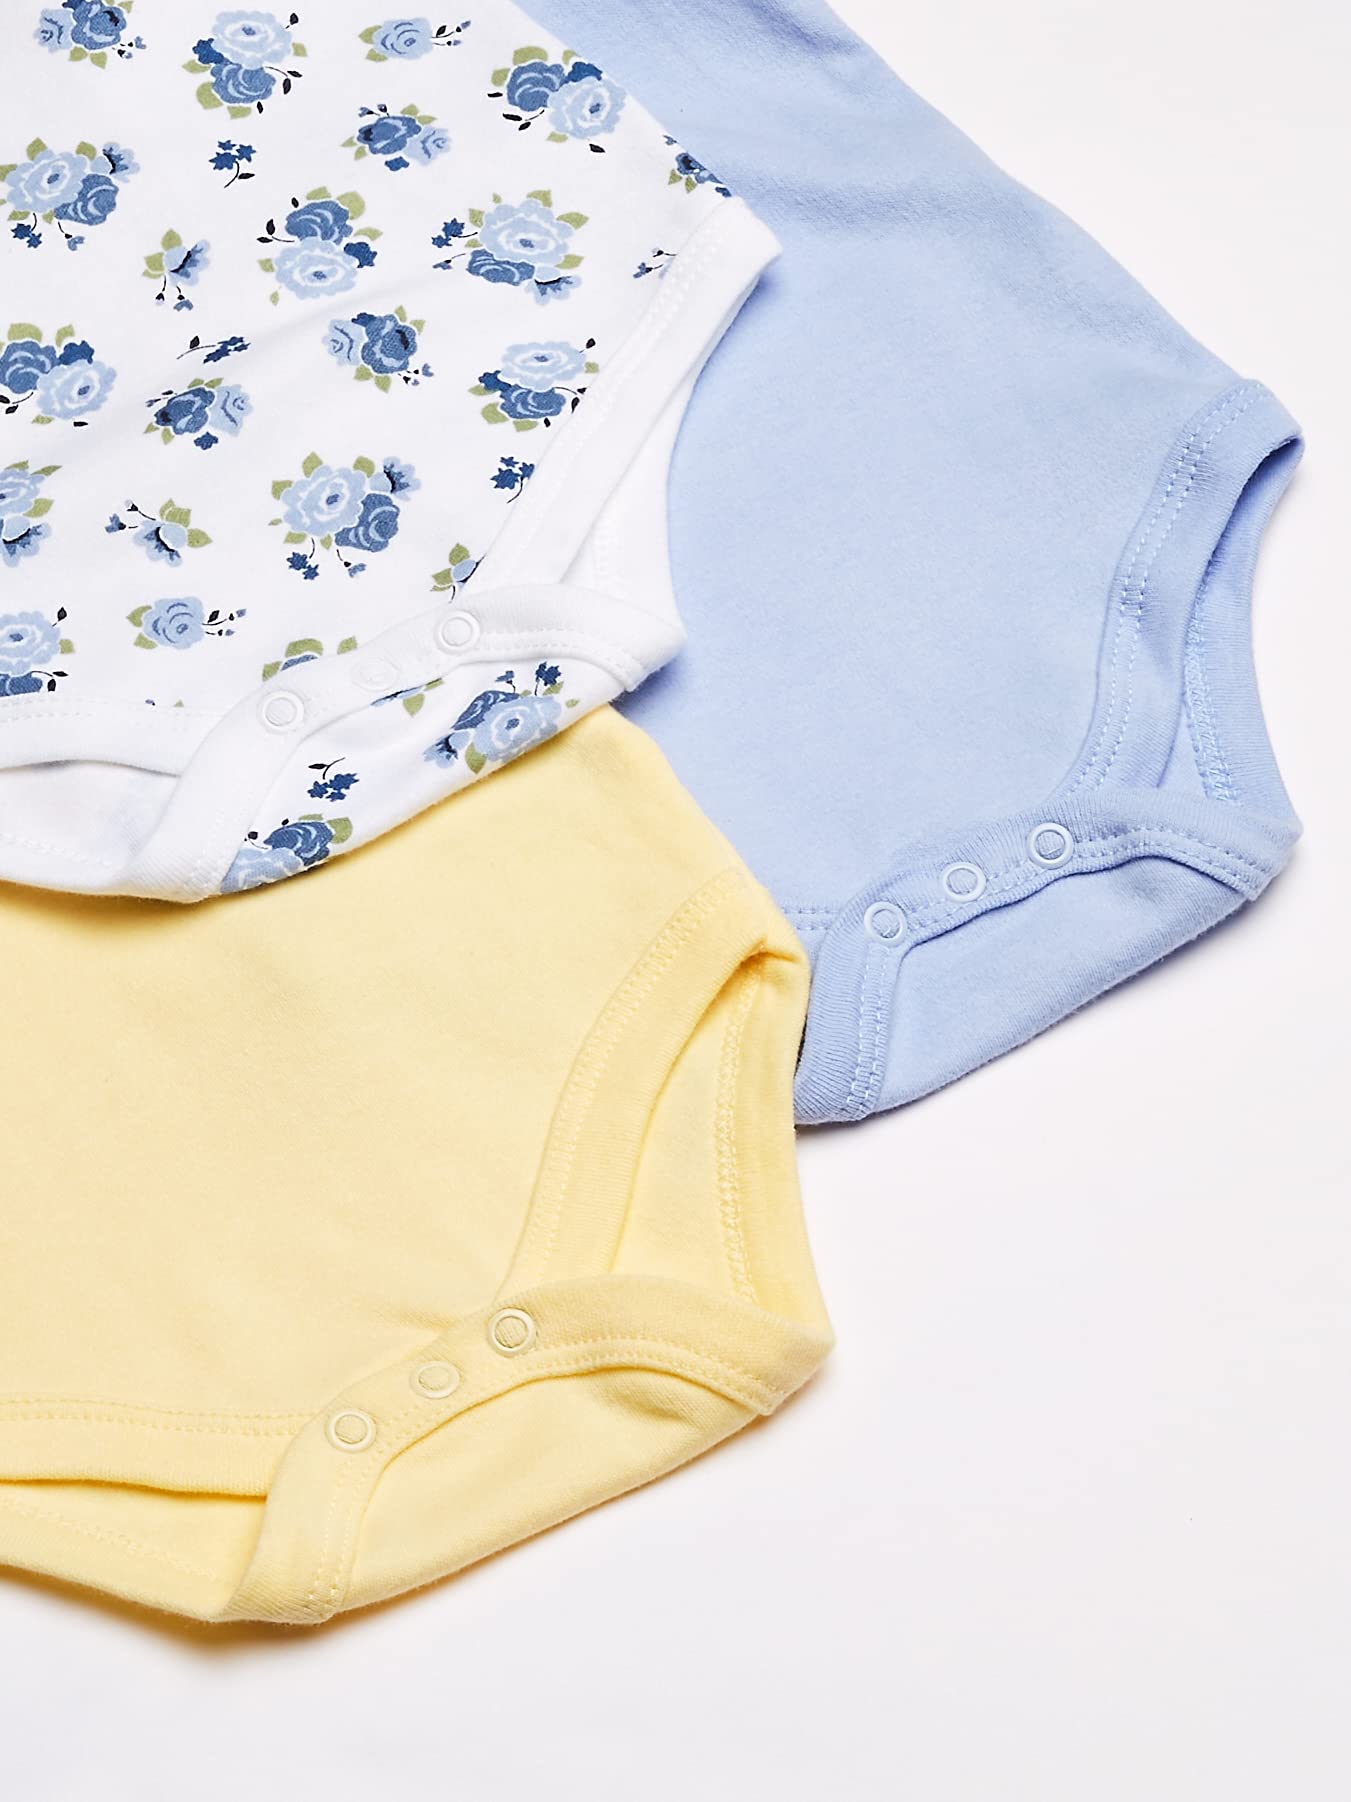 Luvable Friends Baby Girls' Cotton Bodysuits